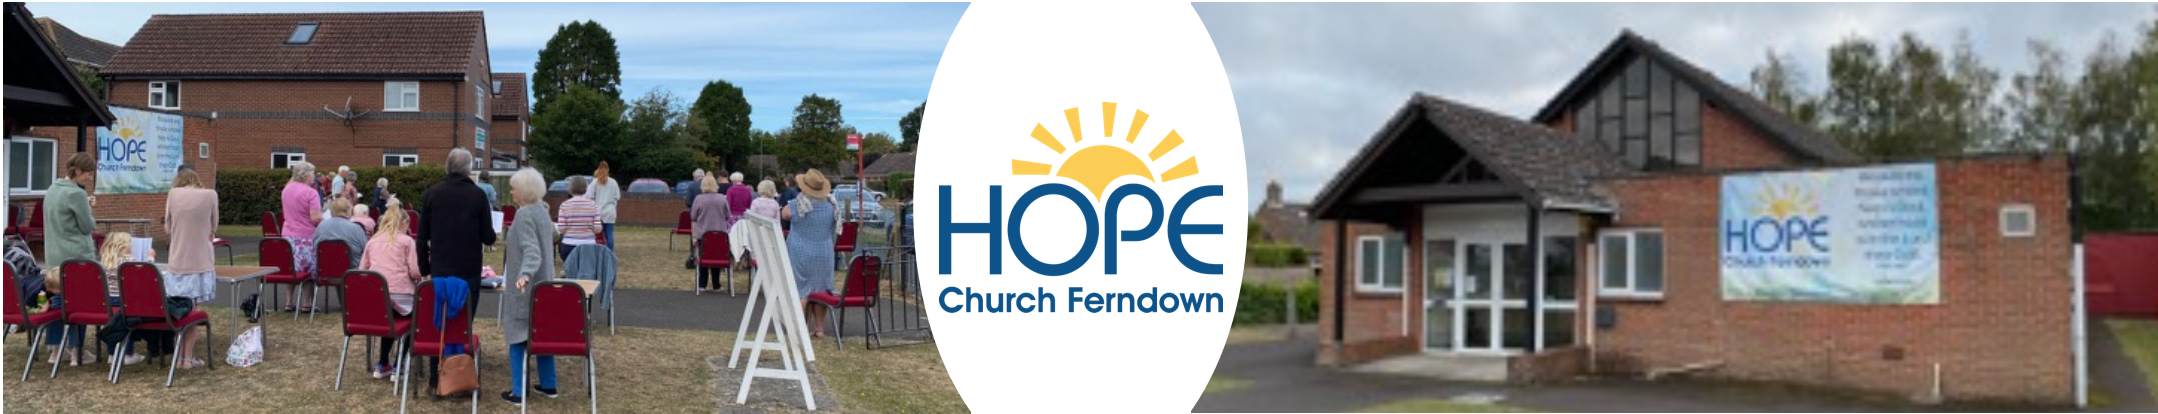 HOPE CHURCH FERNDOWN